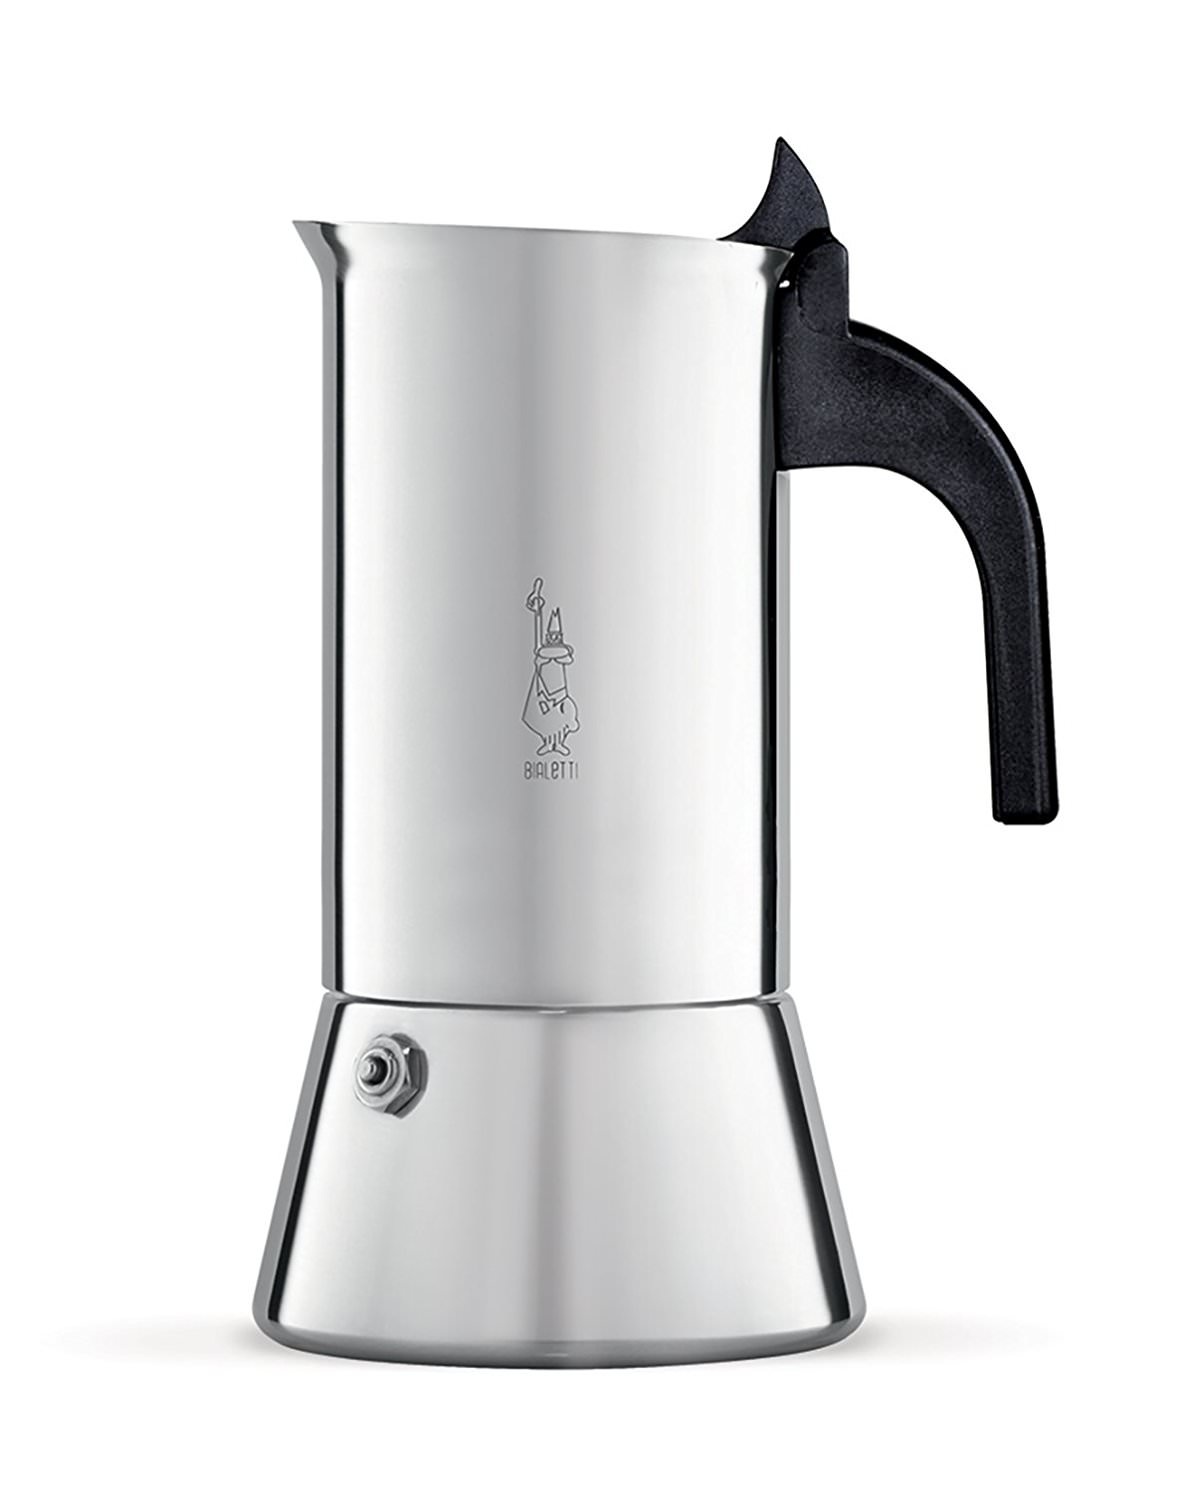 Bialetti Moka Express Espresso Maker - 6 Cup